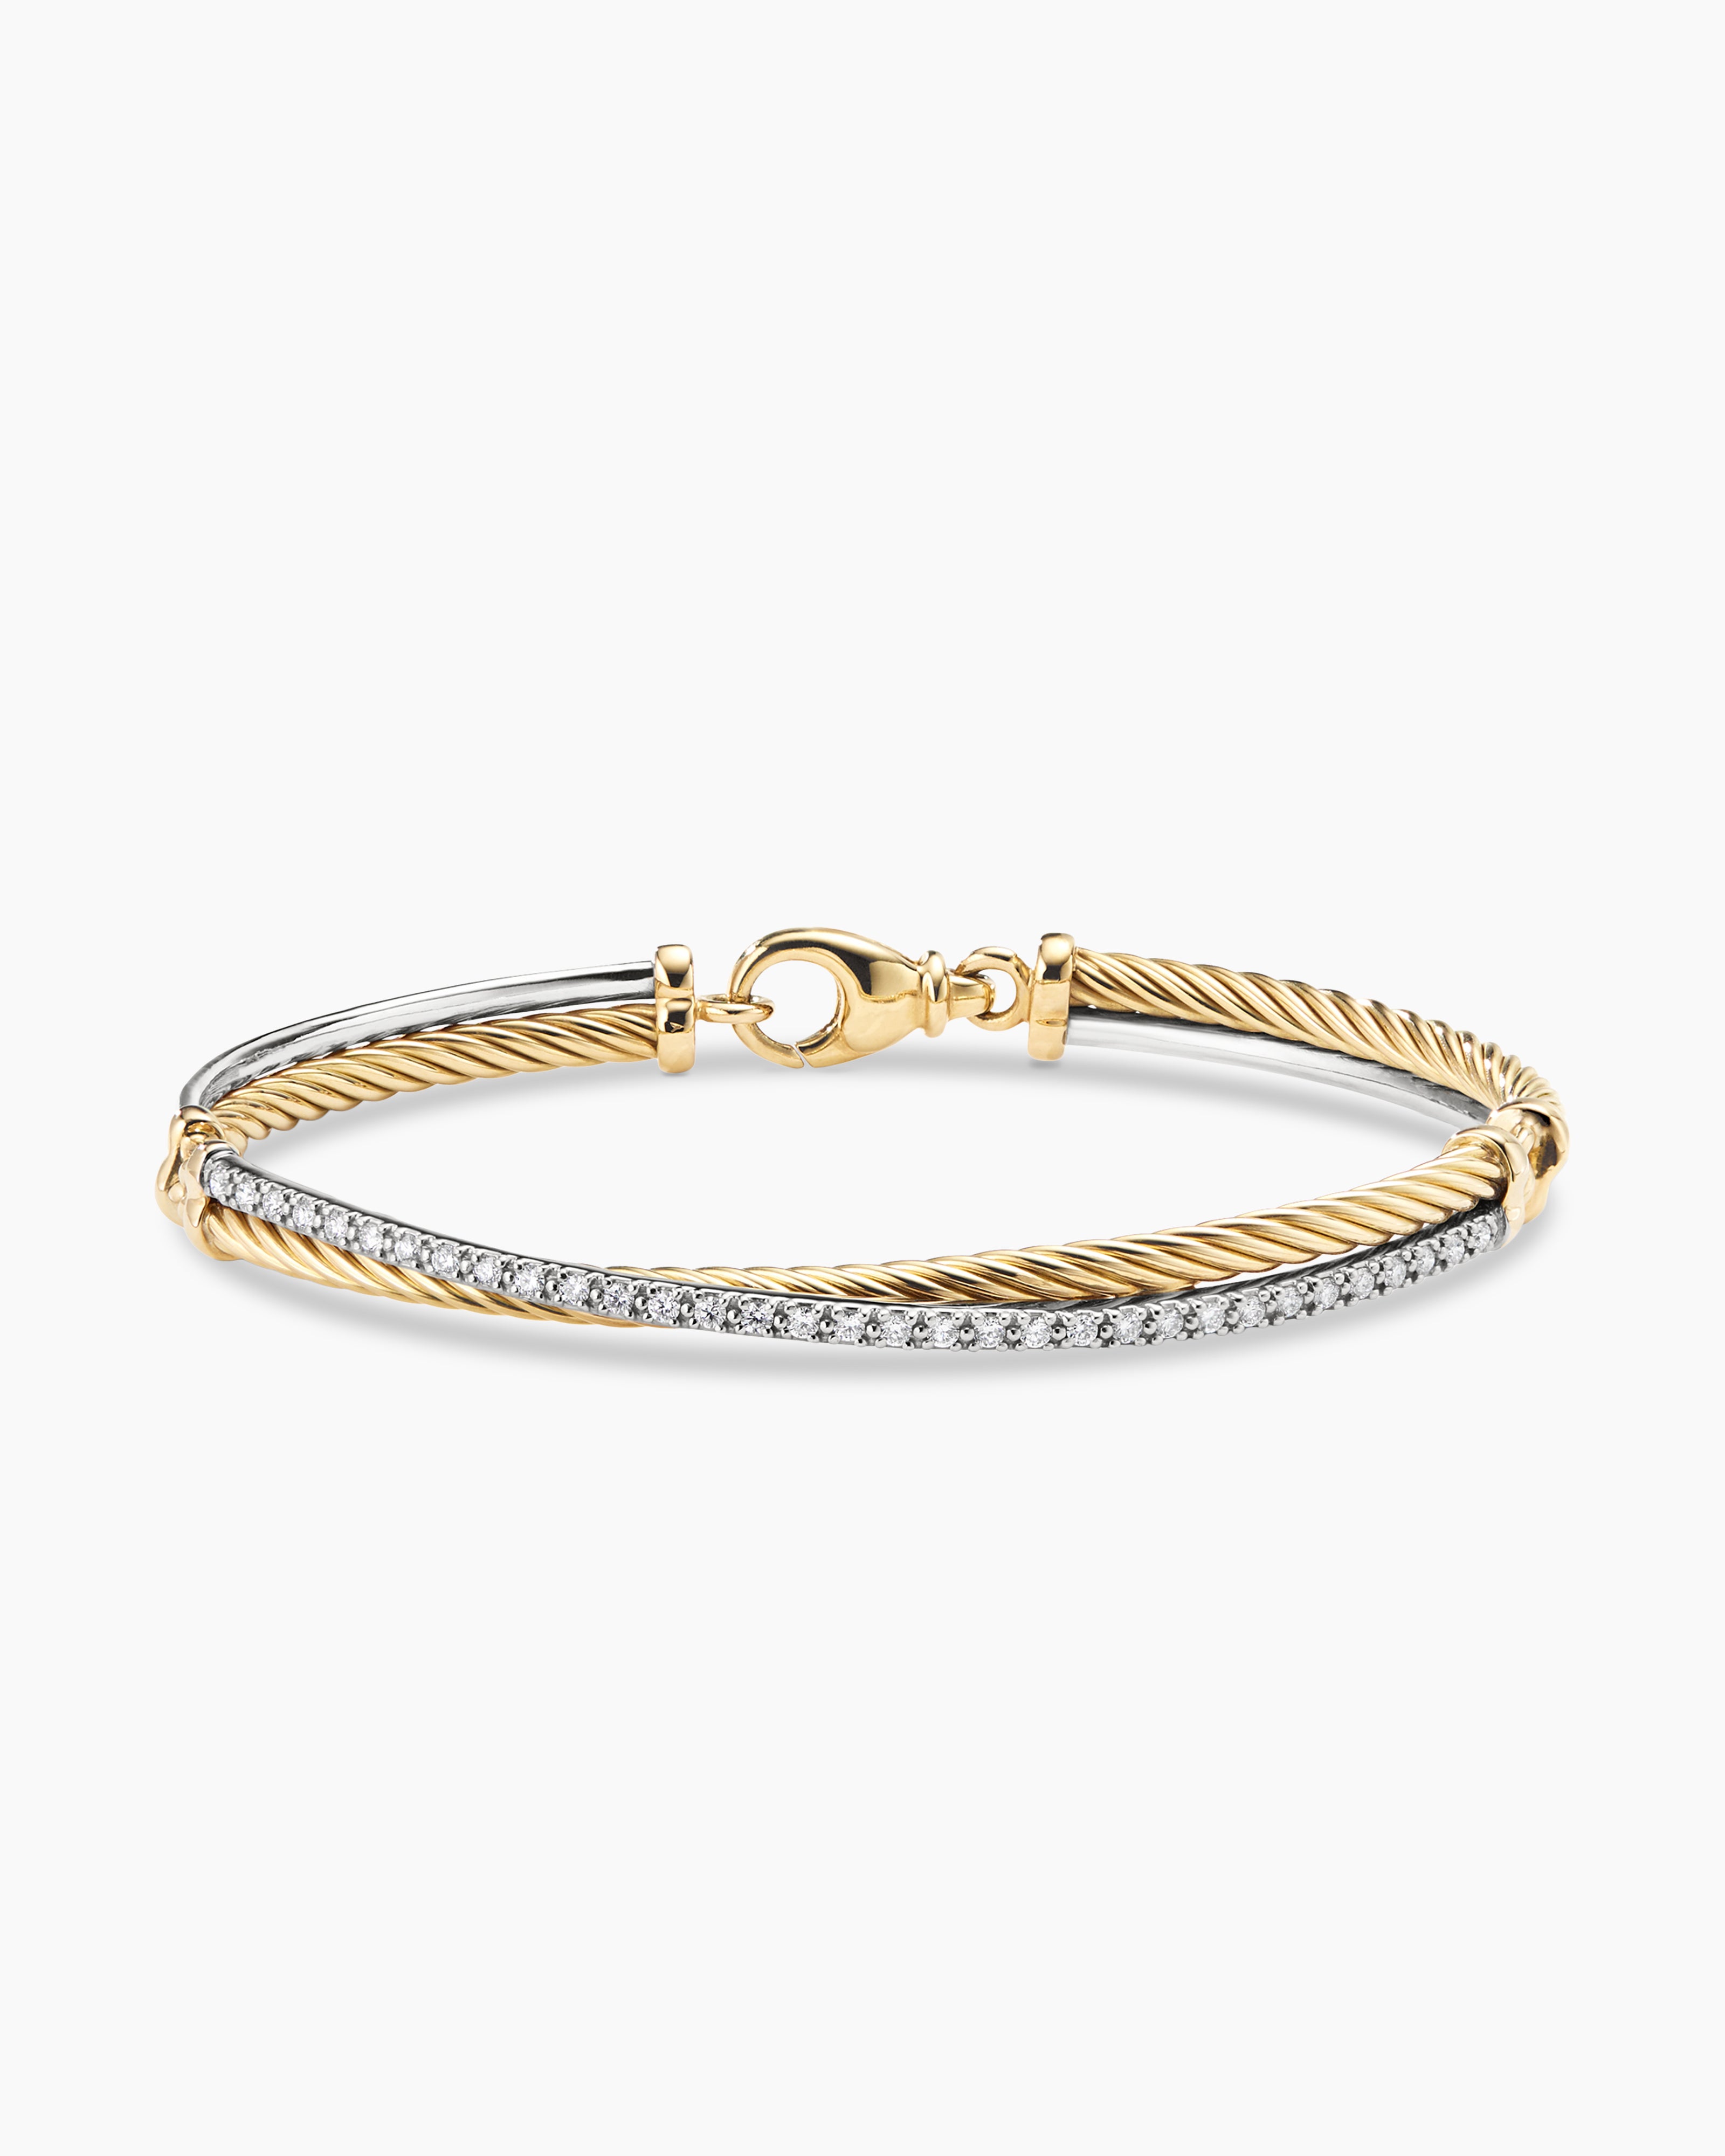 Buy Diamond Bracelet in 18KT Yellow Gold Online